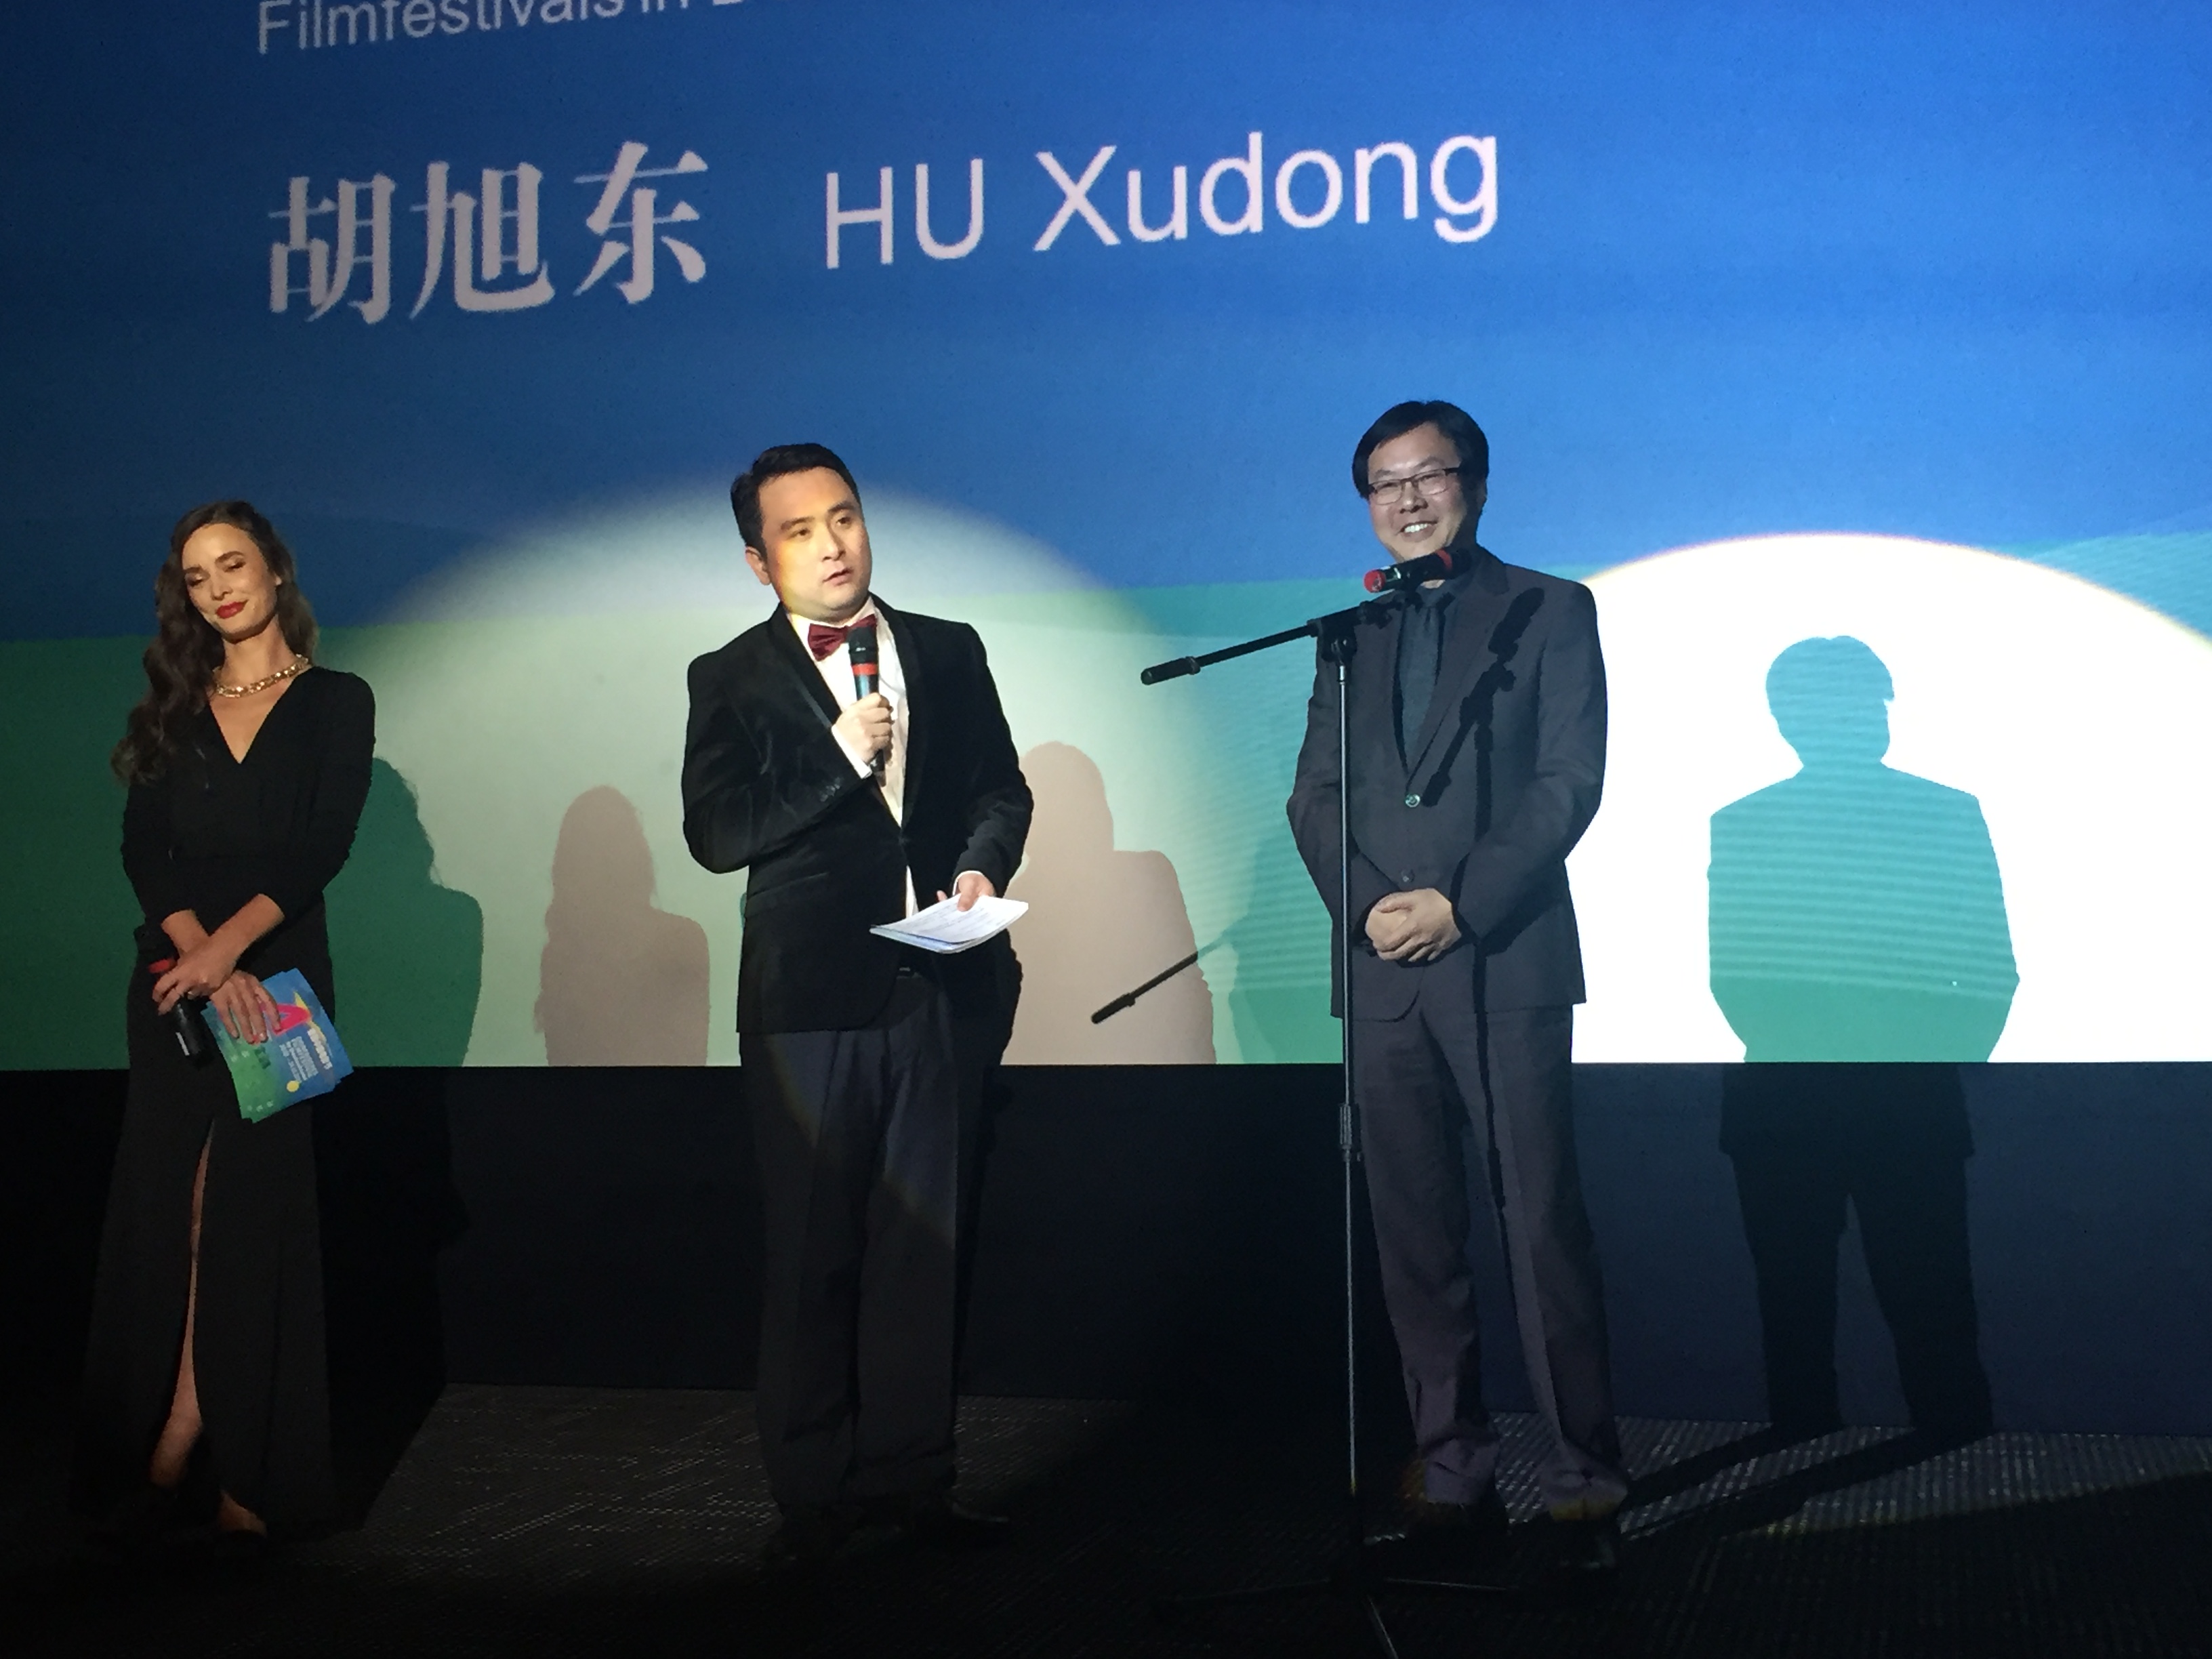 Chefredakteur Hu eröffnet die Preisverleihung